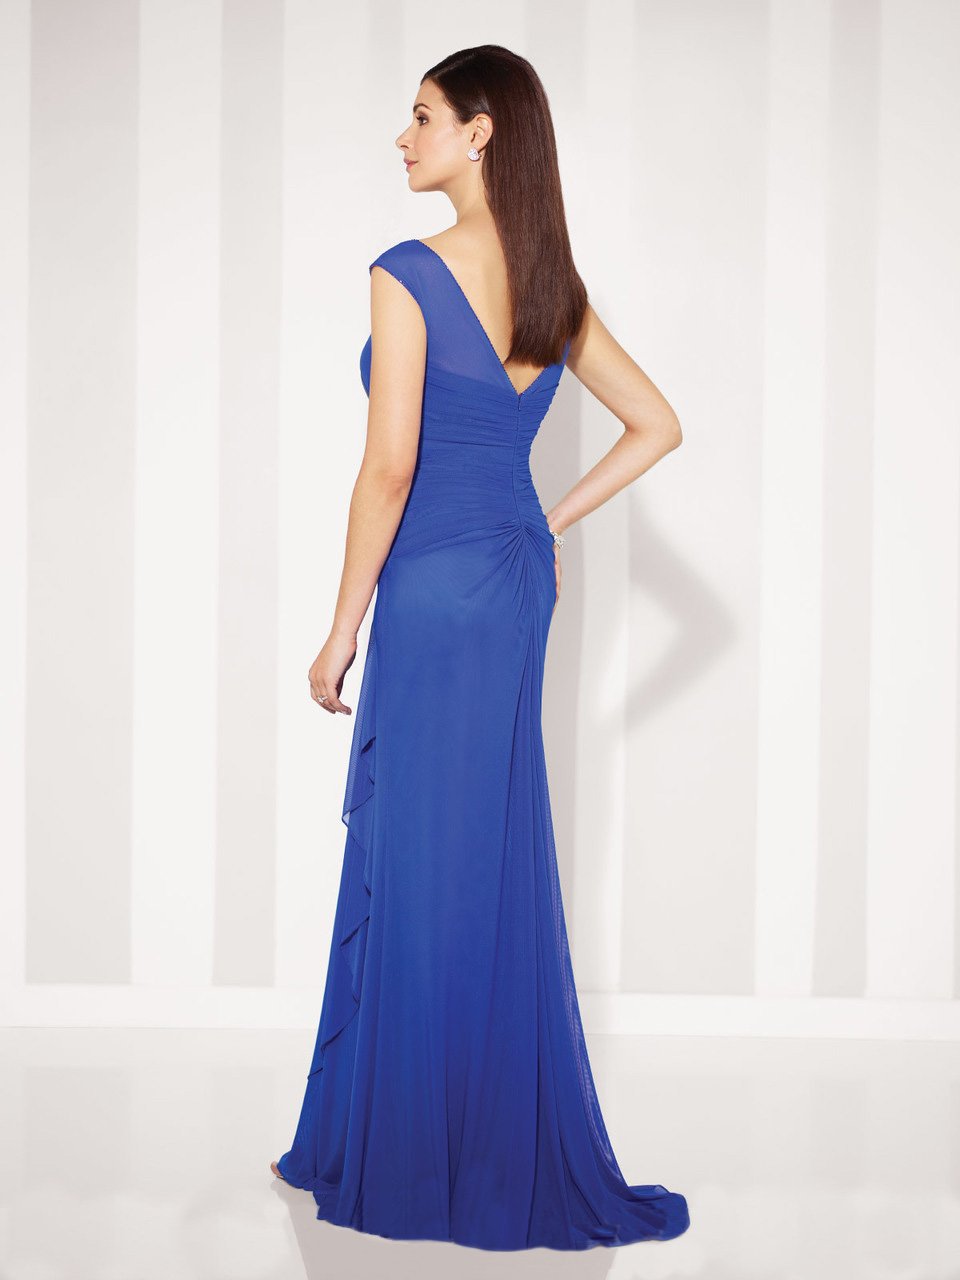 Cameron Blake - 117601 Dress in Royal Blue